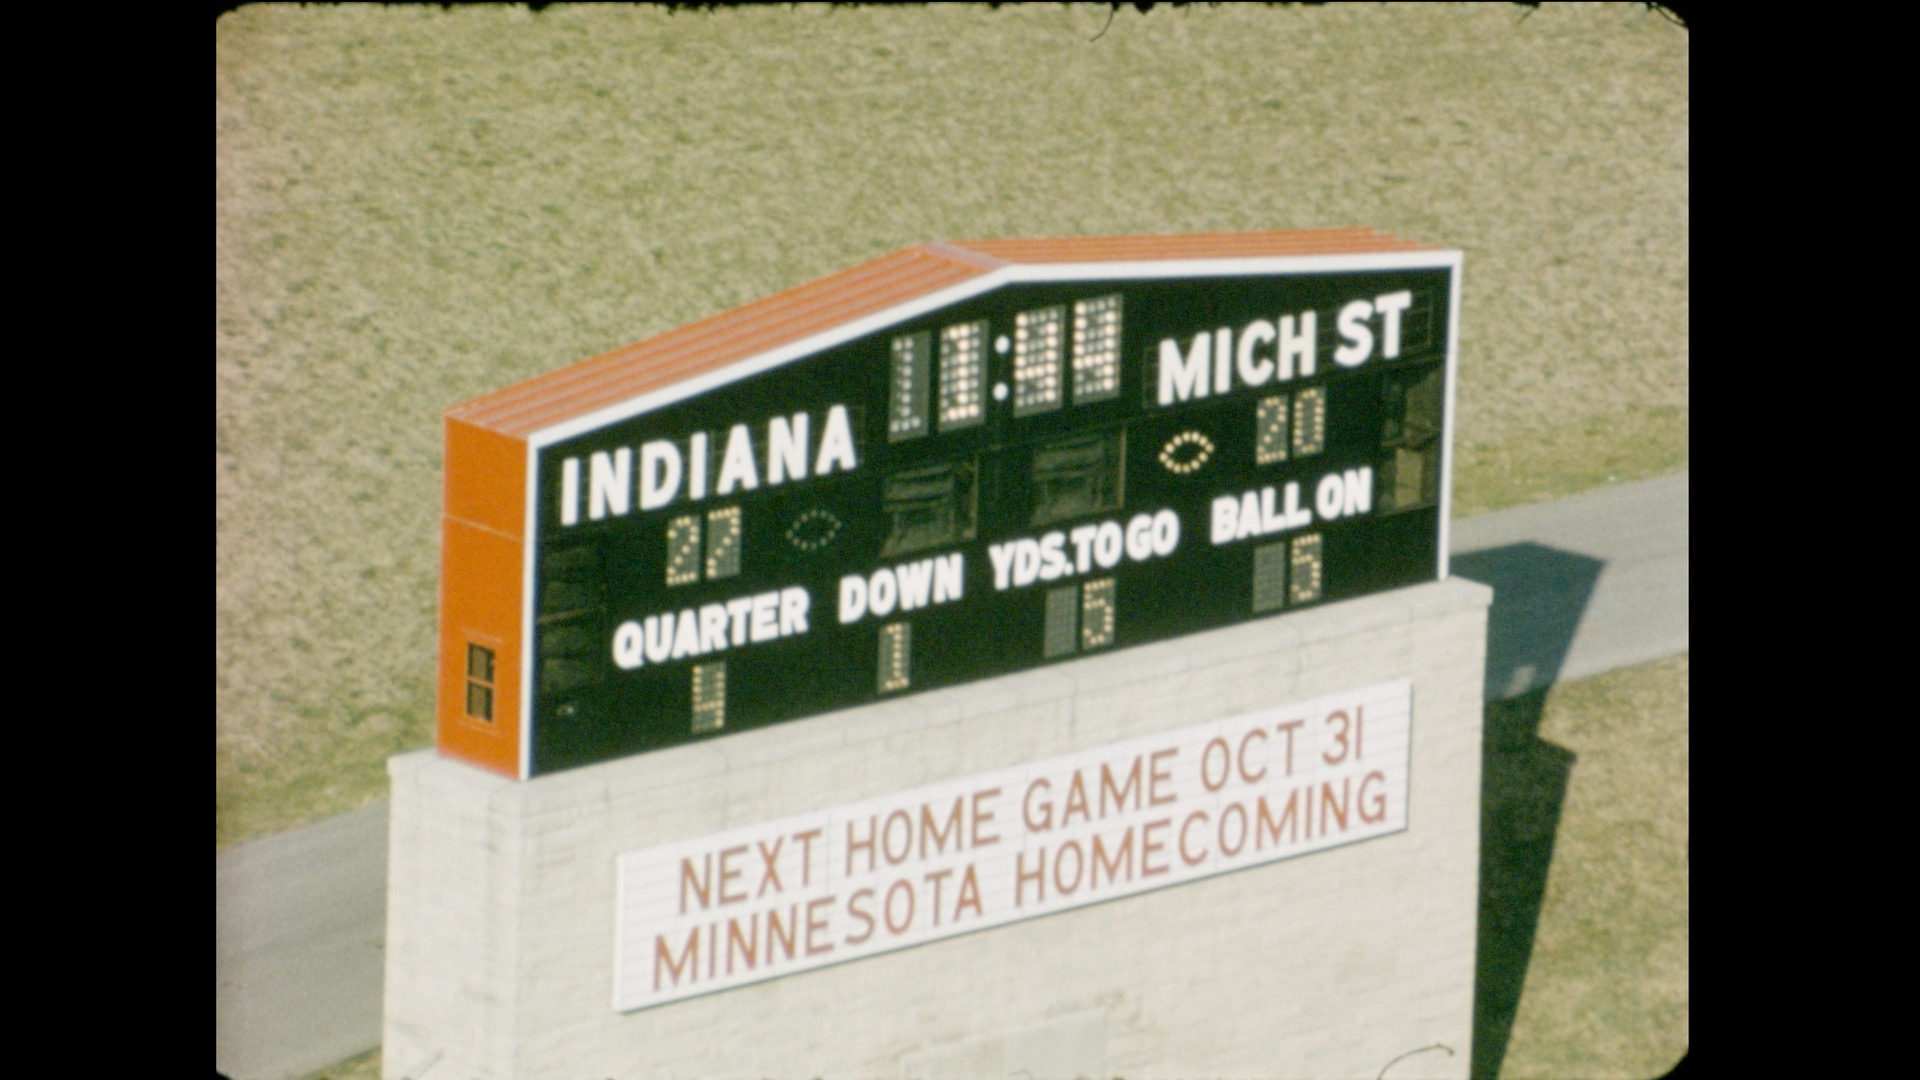 MSU Football vs. Indiana, 1964